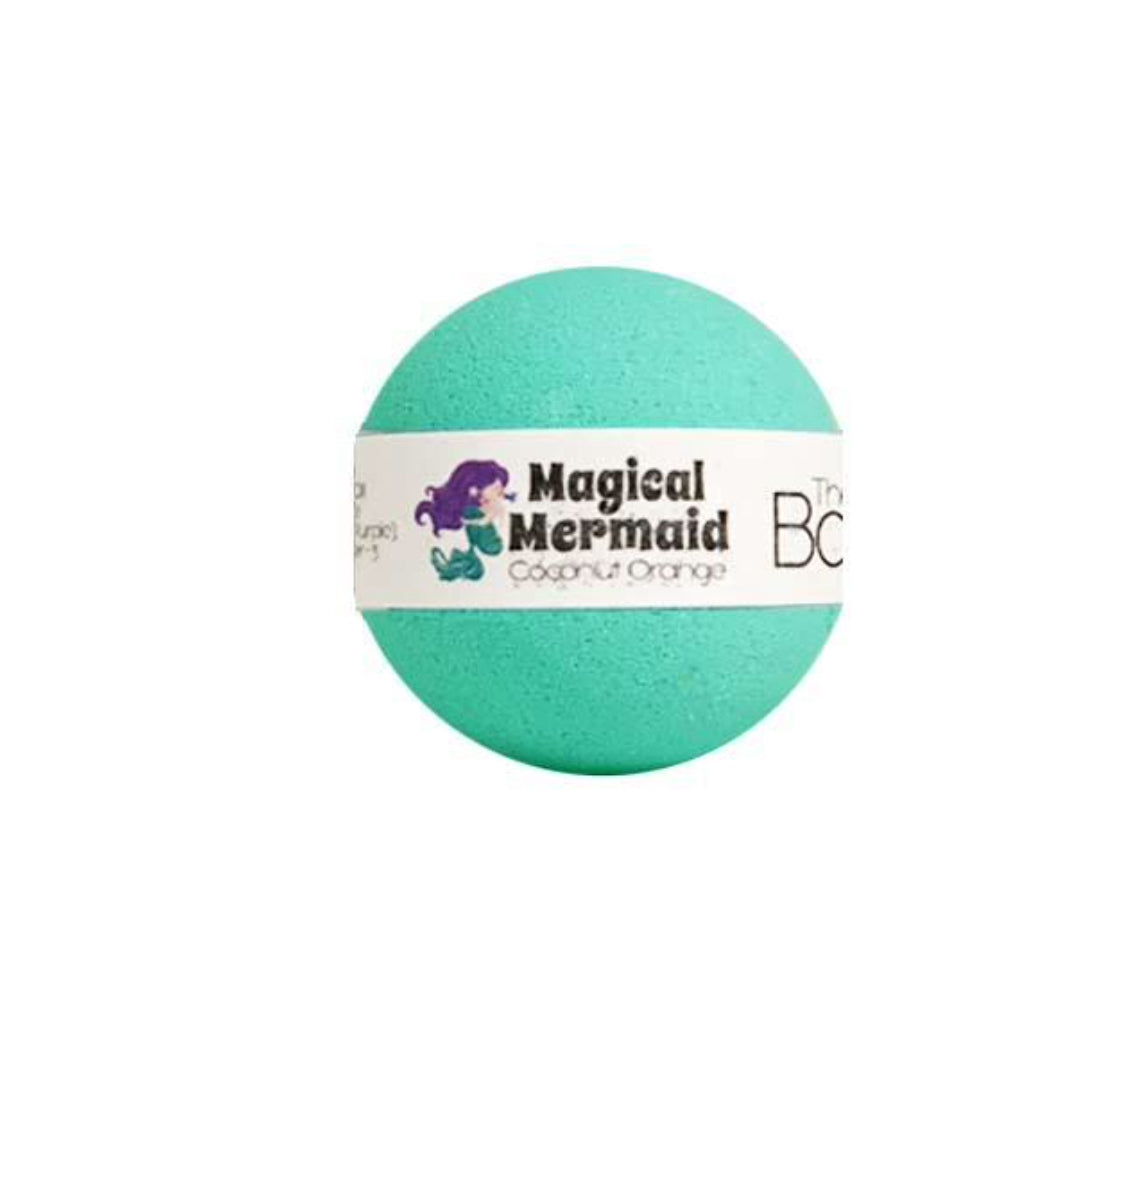 Magical Mermaid Bath Bomb - MINI